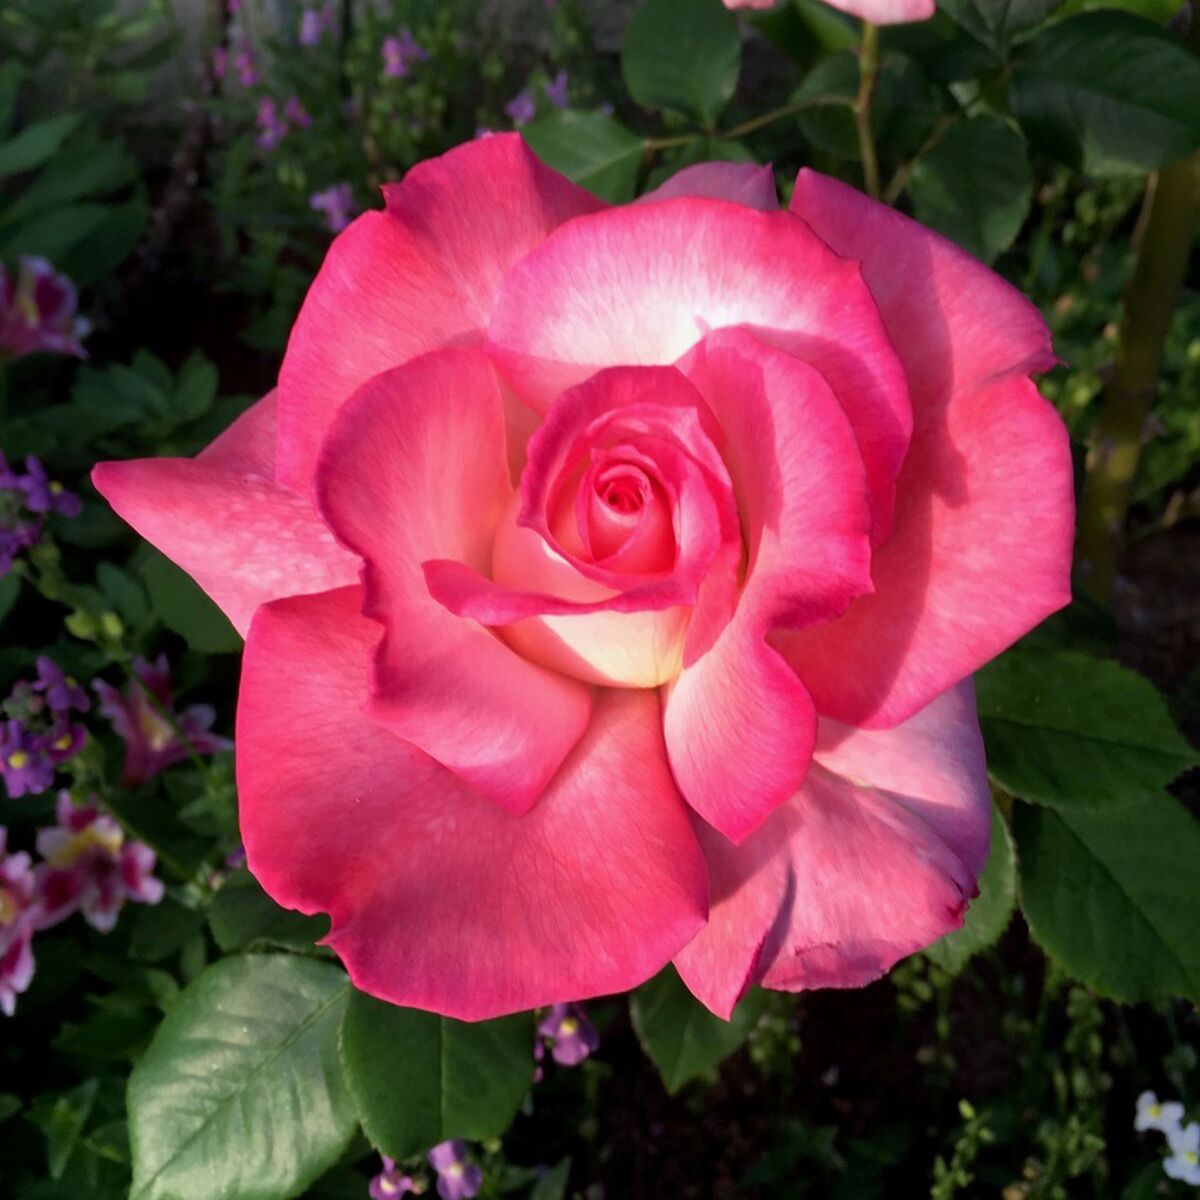 ‘Secret’ is a fragrant hybrid tea rose with a quick rebloom.